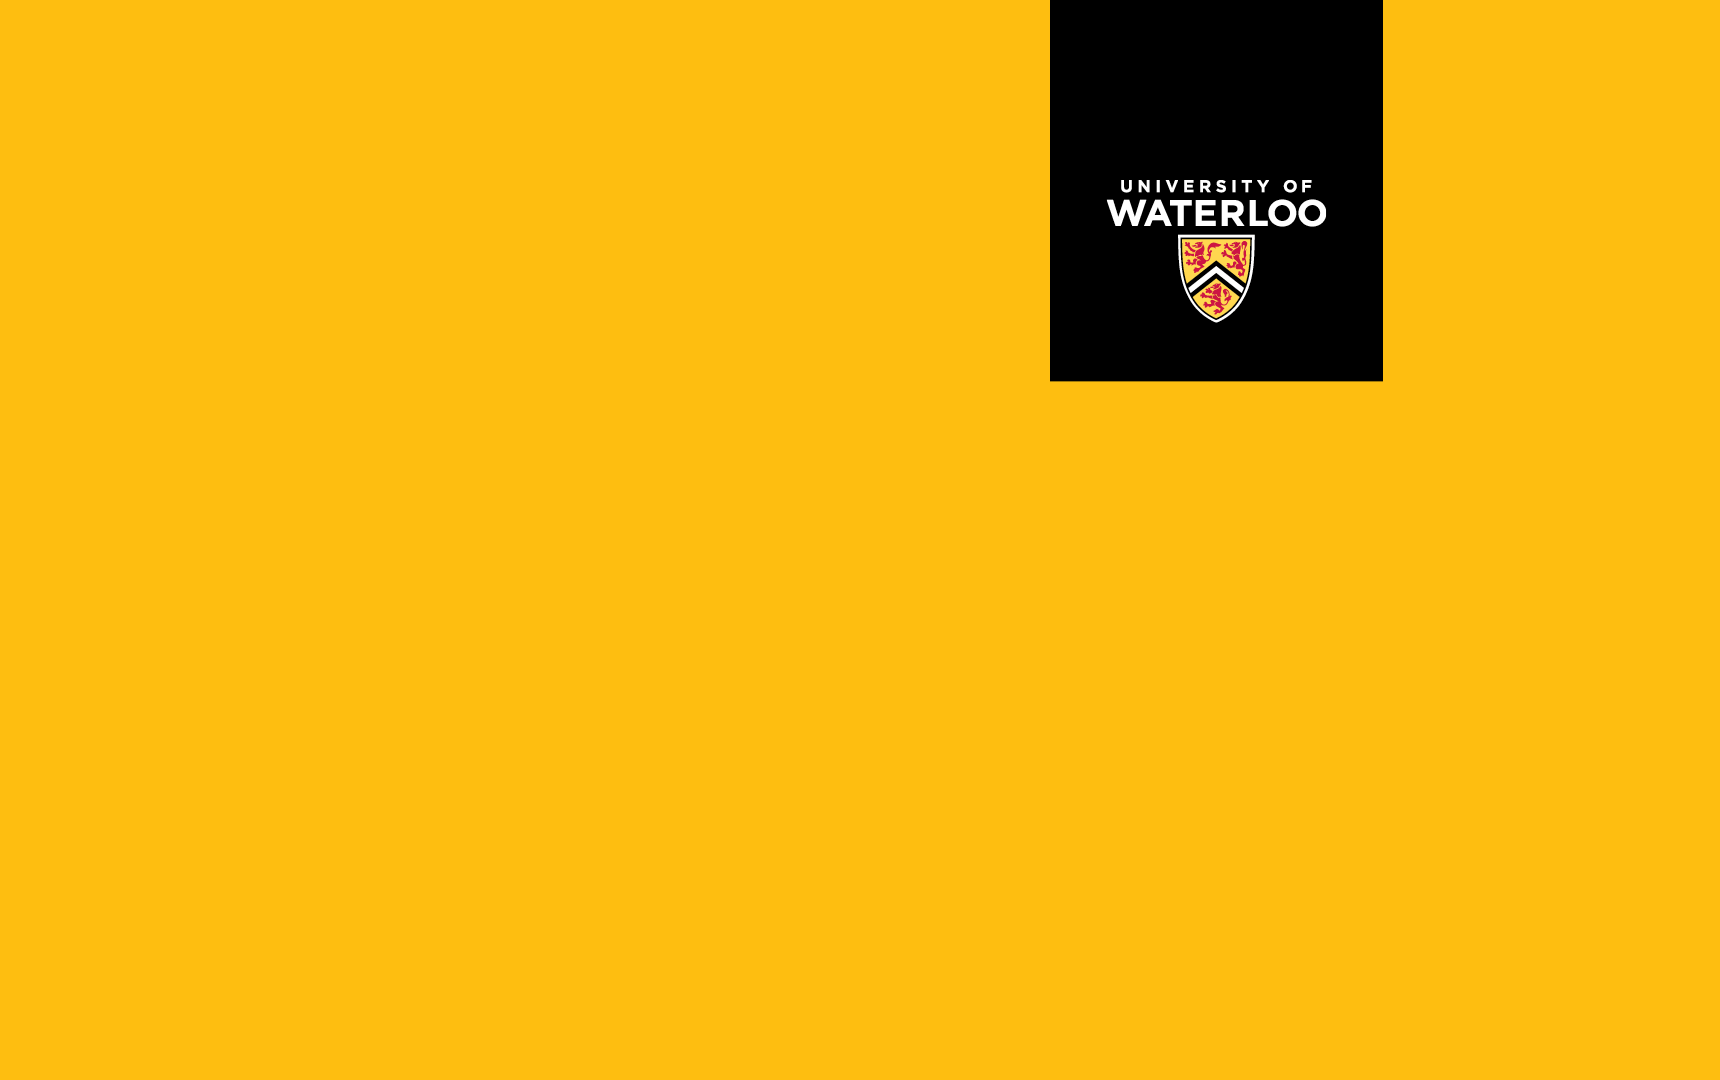 Yellow background